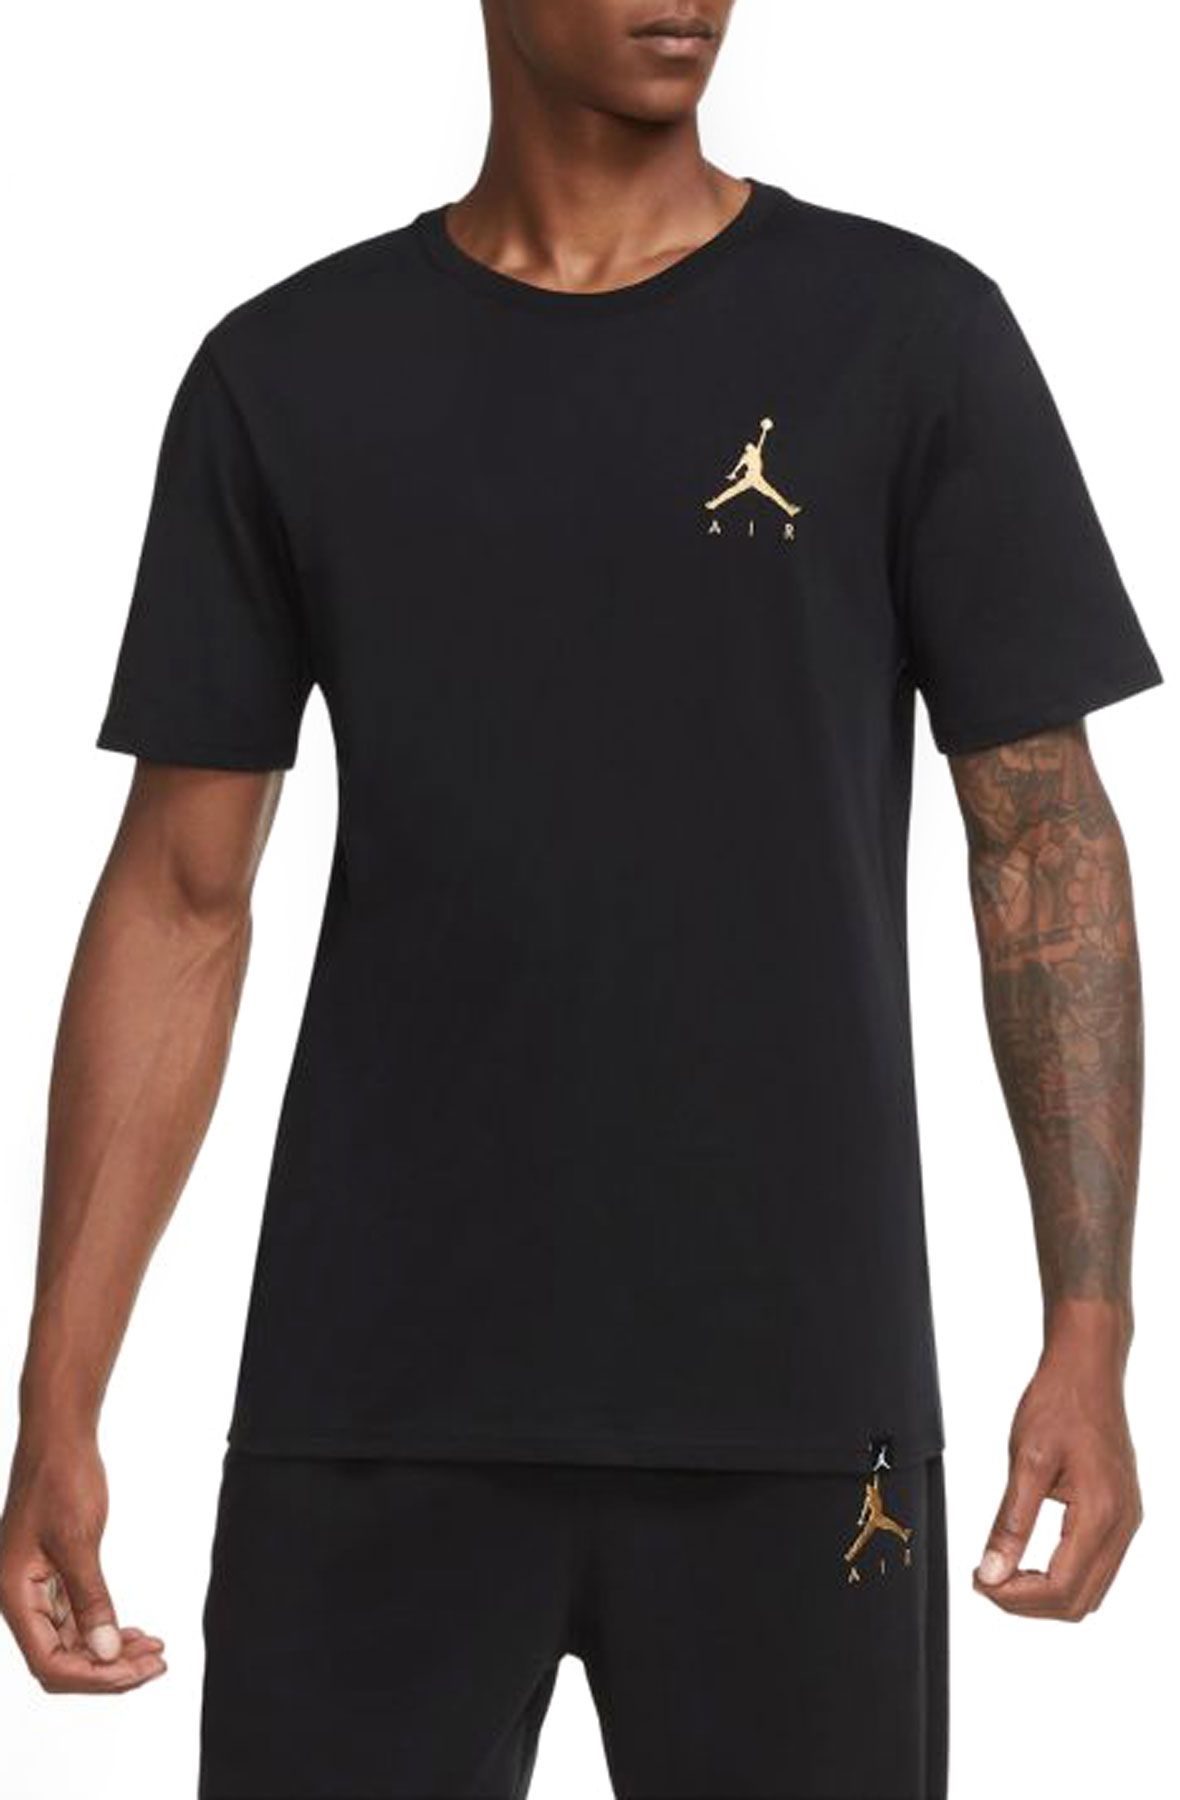 Jordan - Men - Embroidered Air Tee - Black/Tour Yellow - Nohble